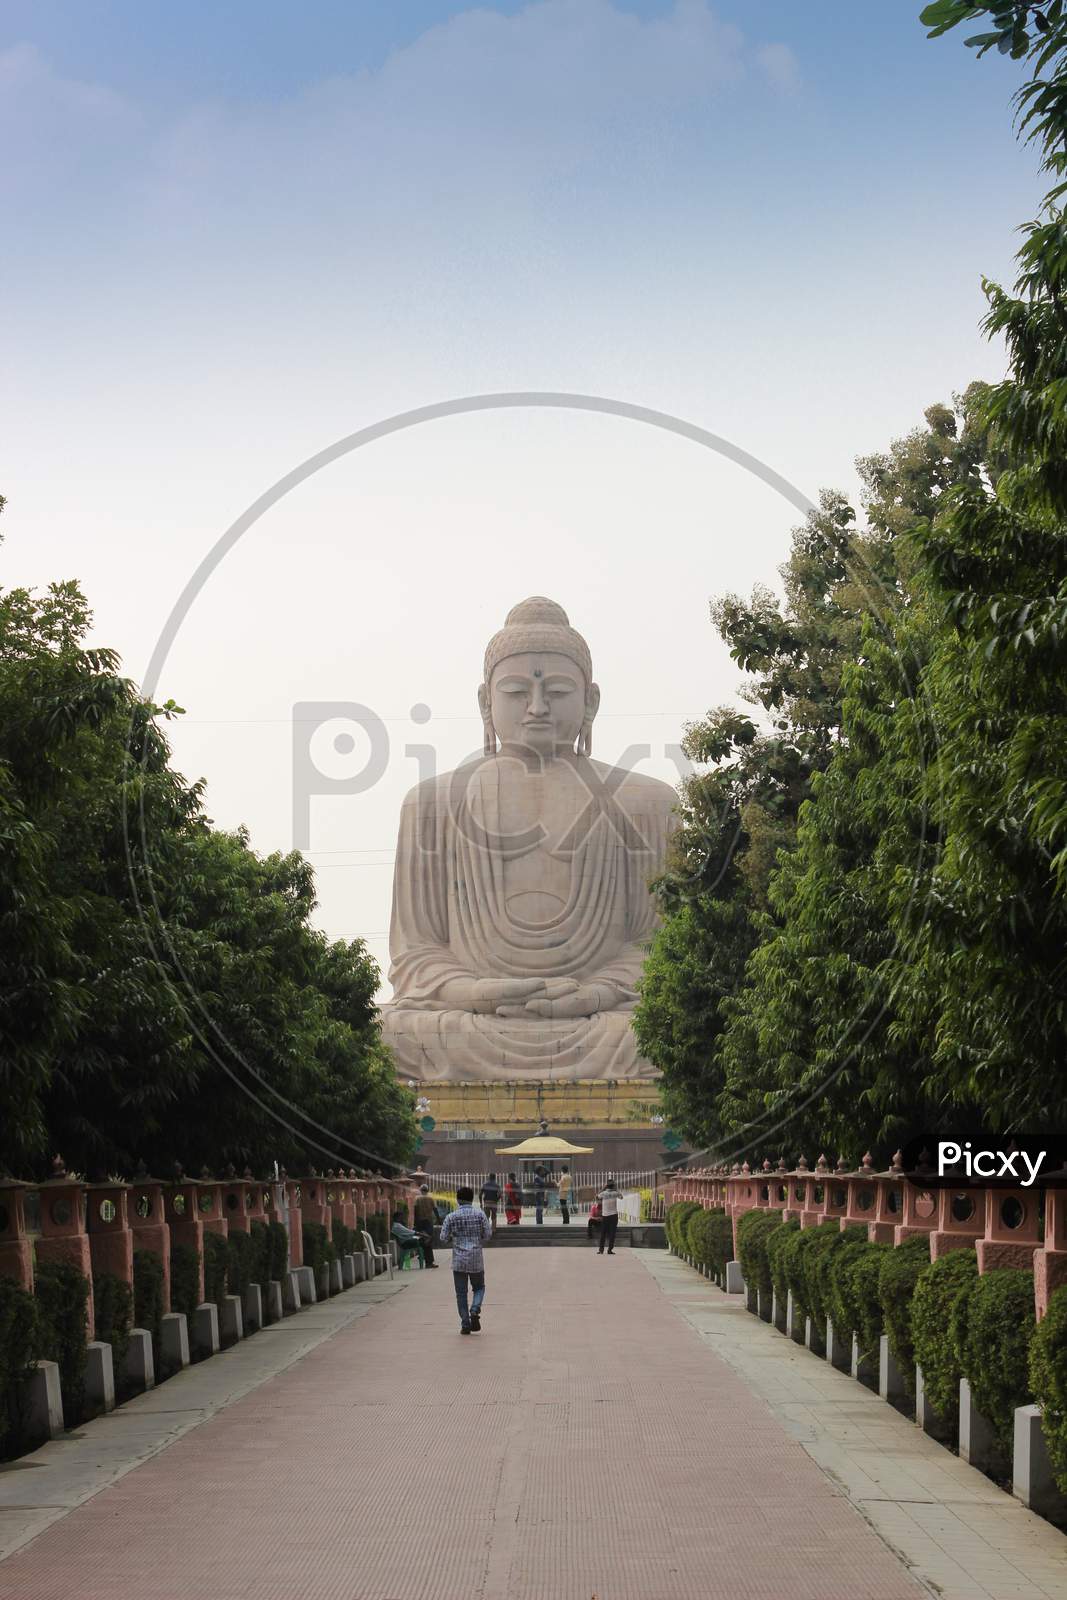 The gigantic Buddha Statue at Bodhgaya pilgrimage in Bihar/India.